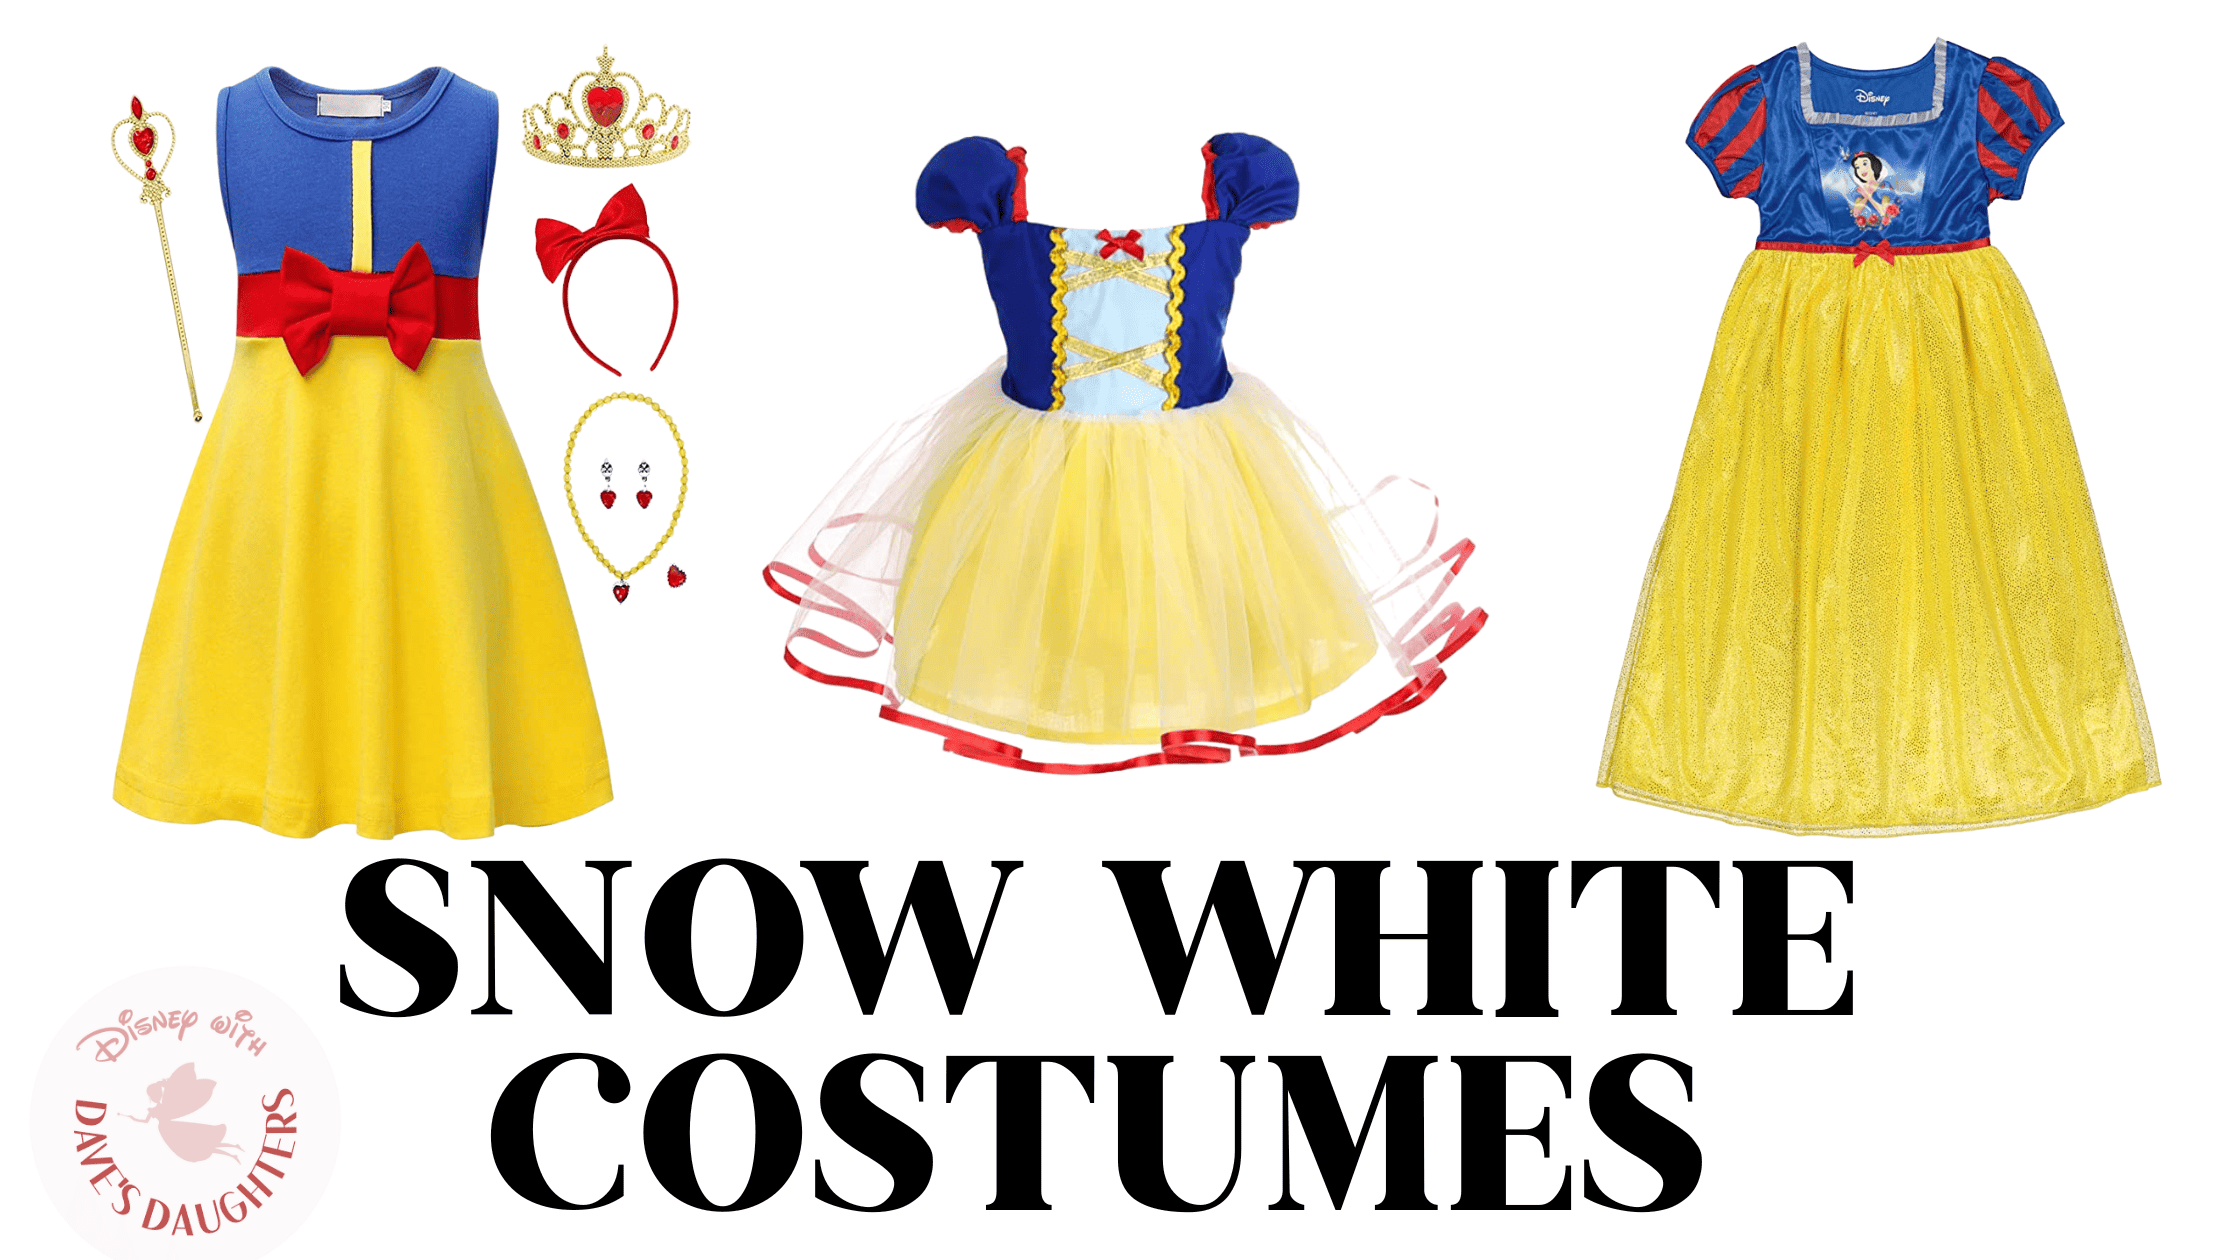 Snow White Princess Costume dresses